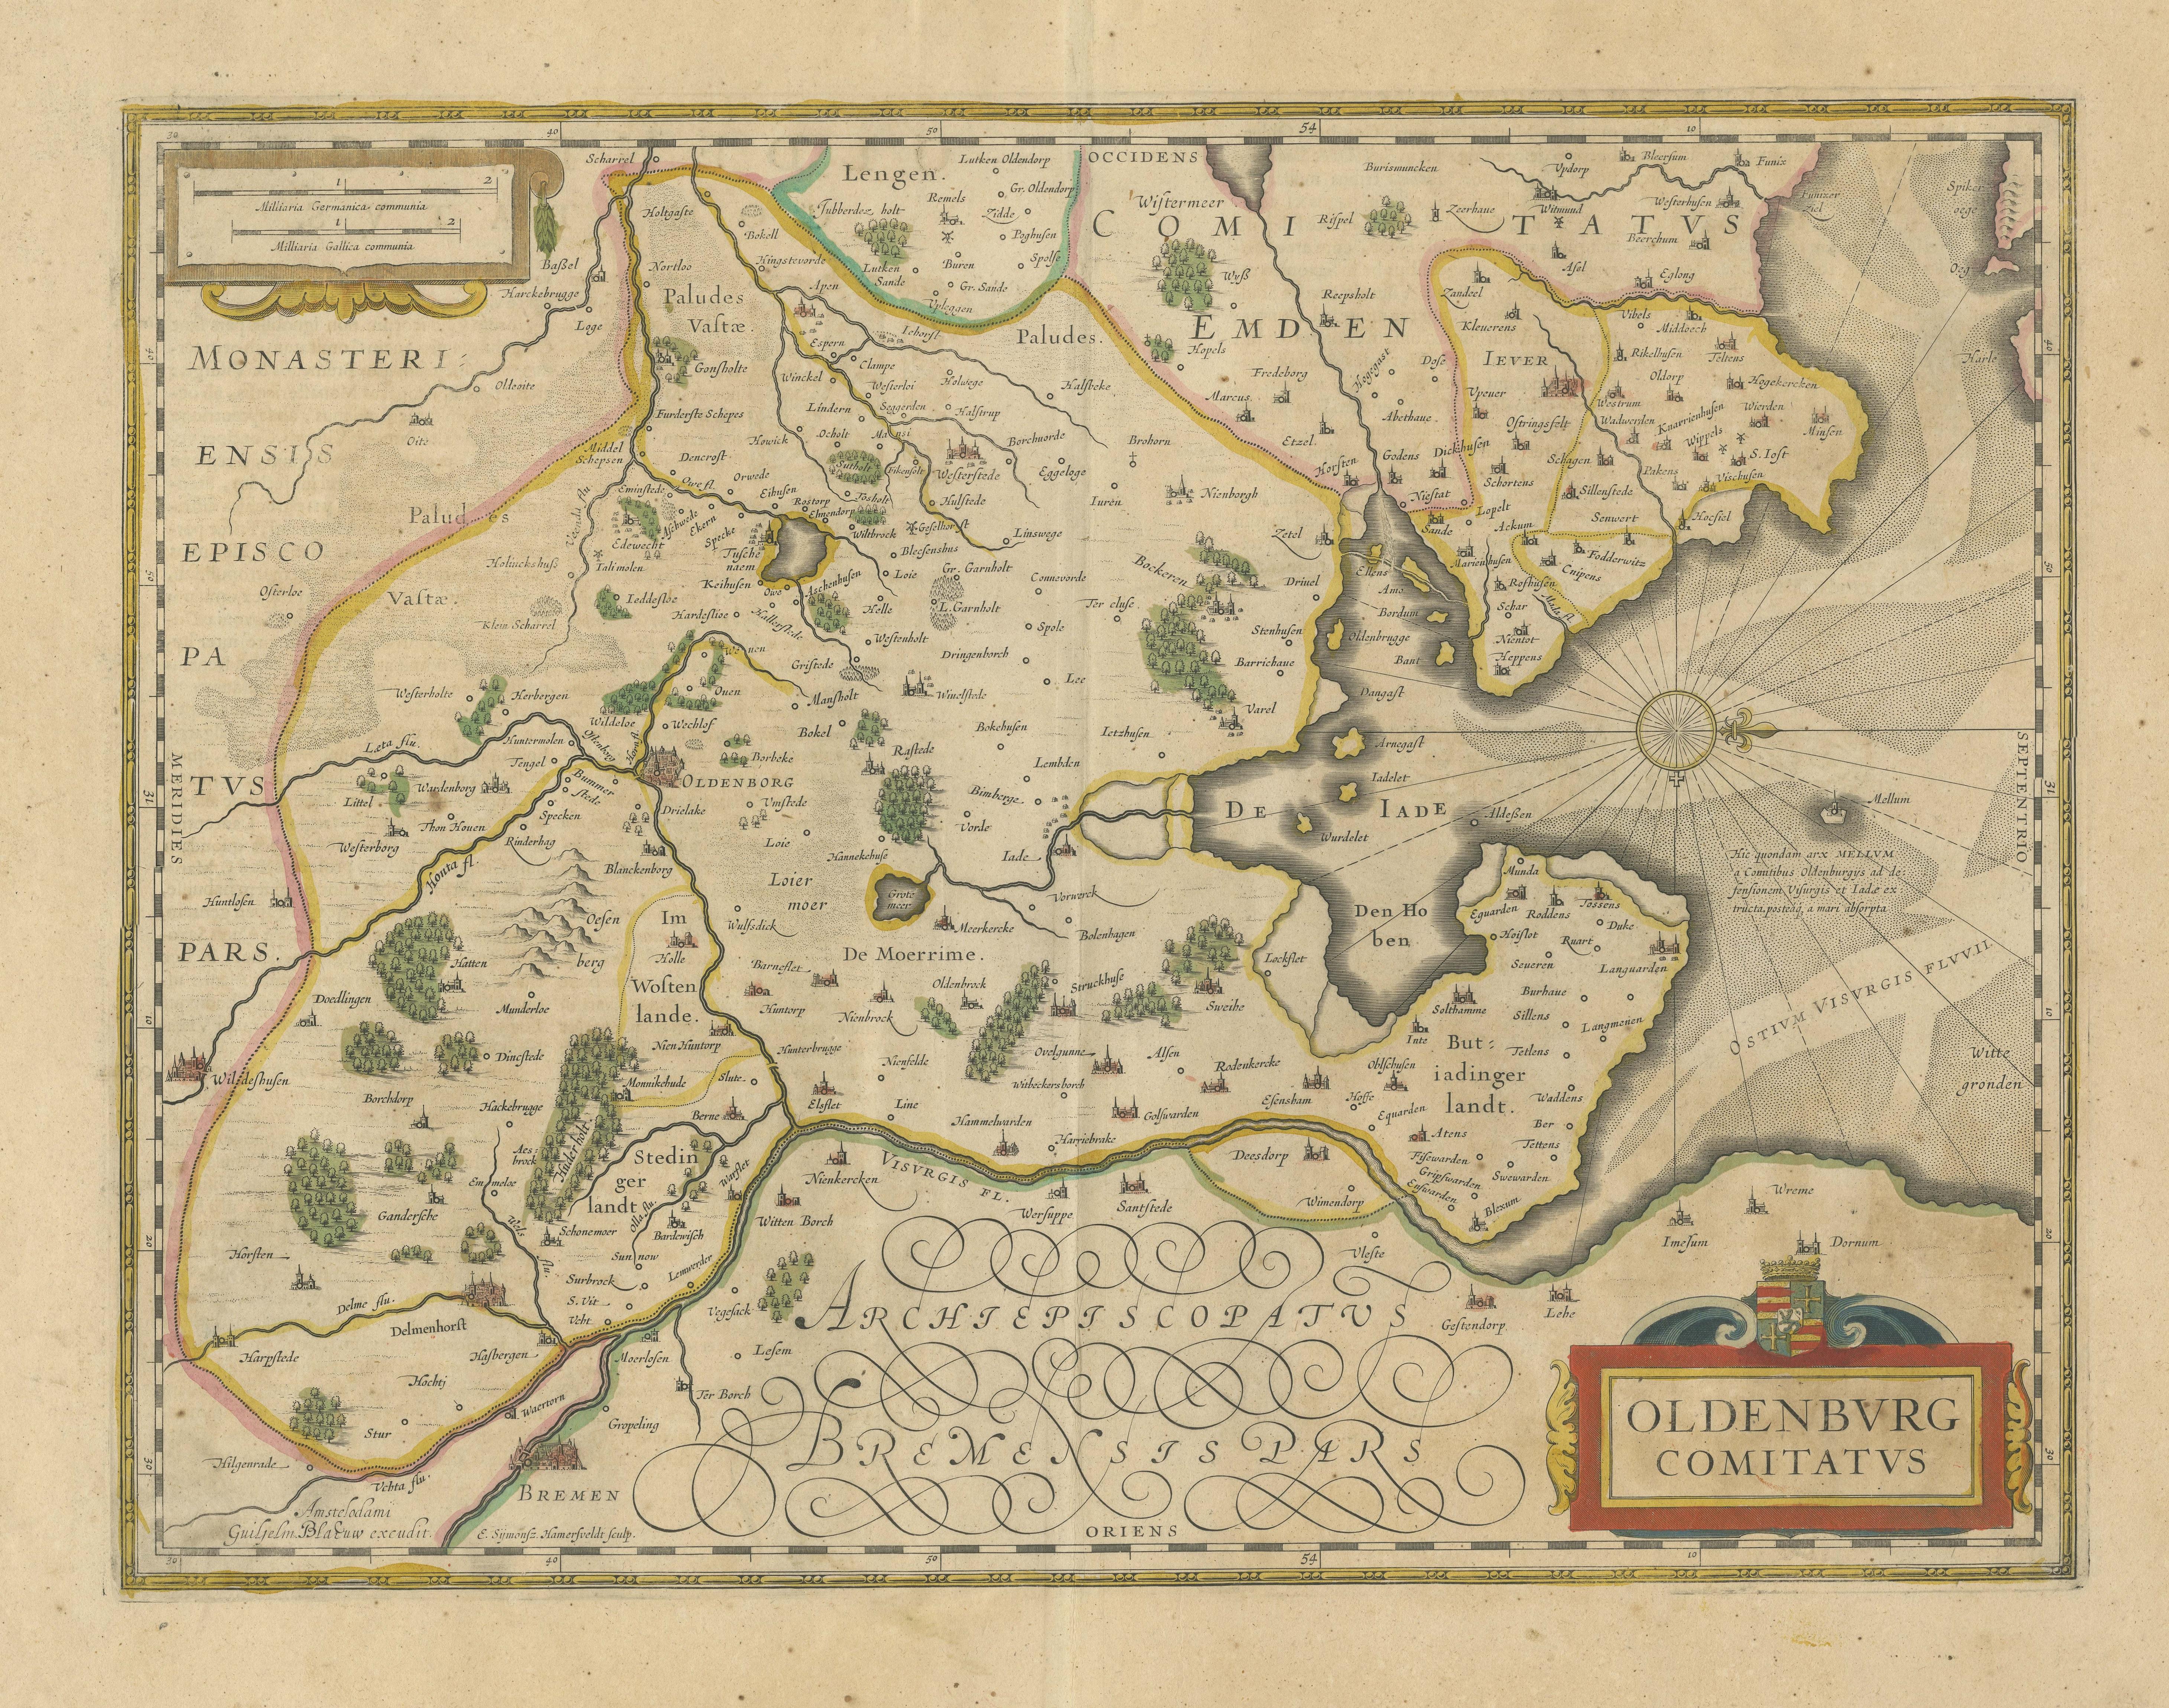 grand duchy of oldenburg map